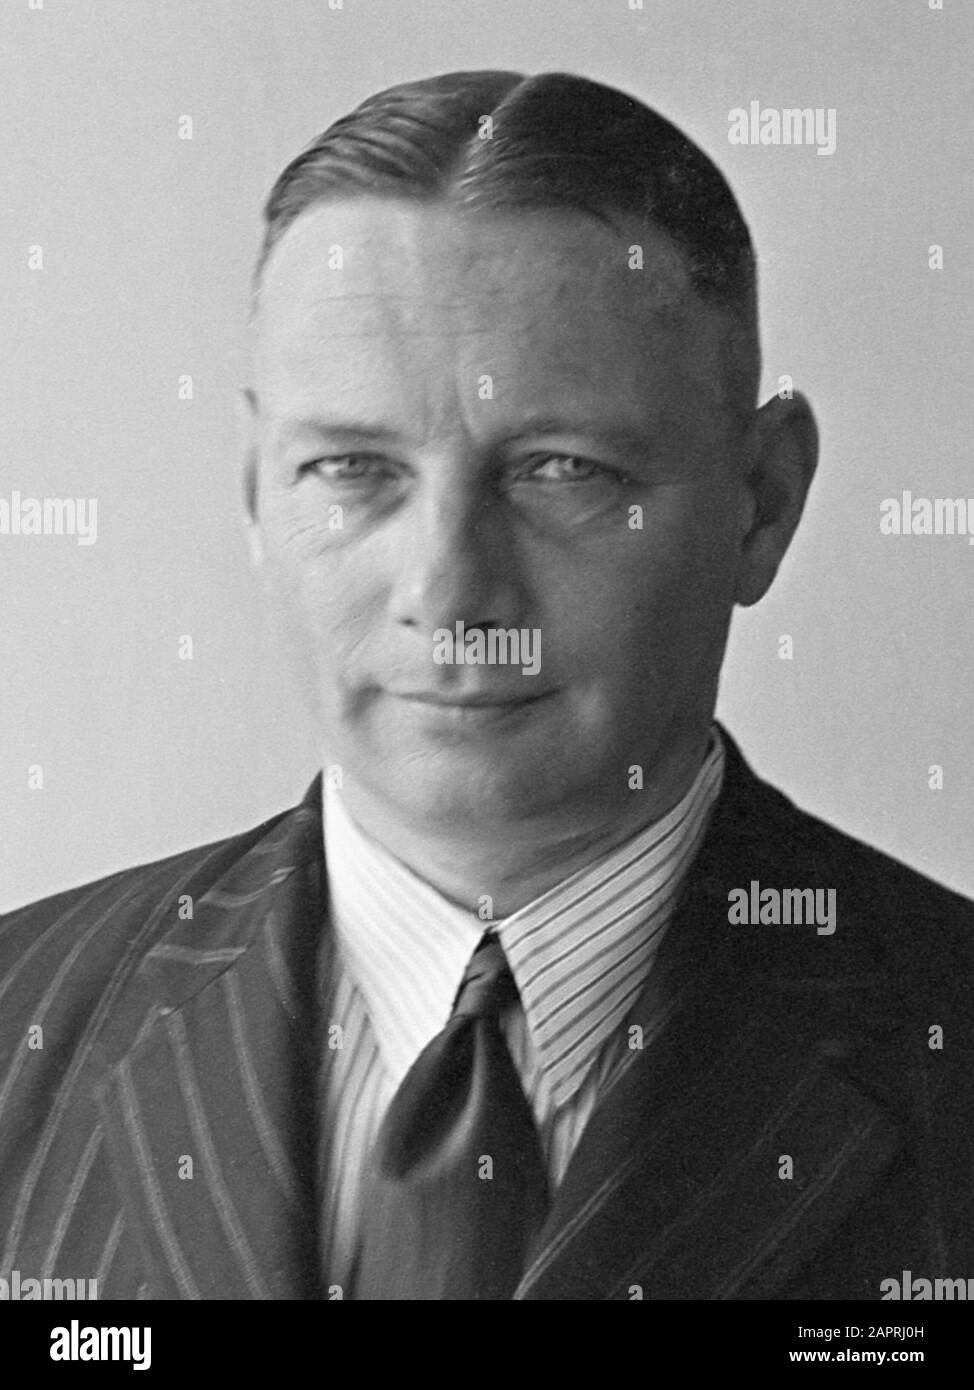 Personeel Kabinet L.L. en opname Generaal Spoor. Generaal S.H. Spoor in burgerkleding maart 1948 Stock Photo